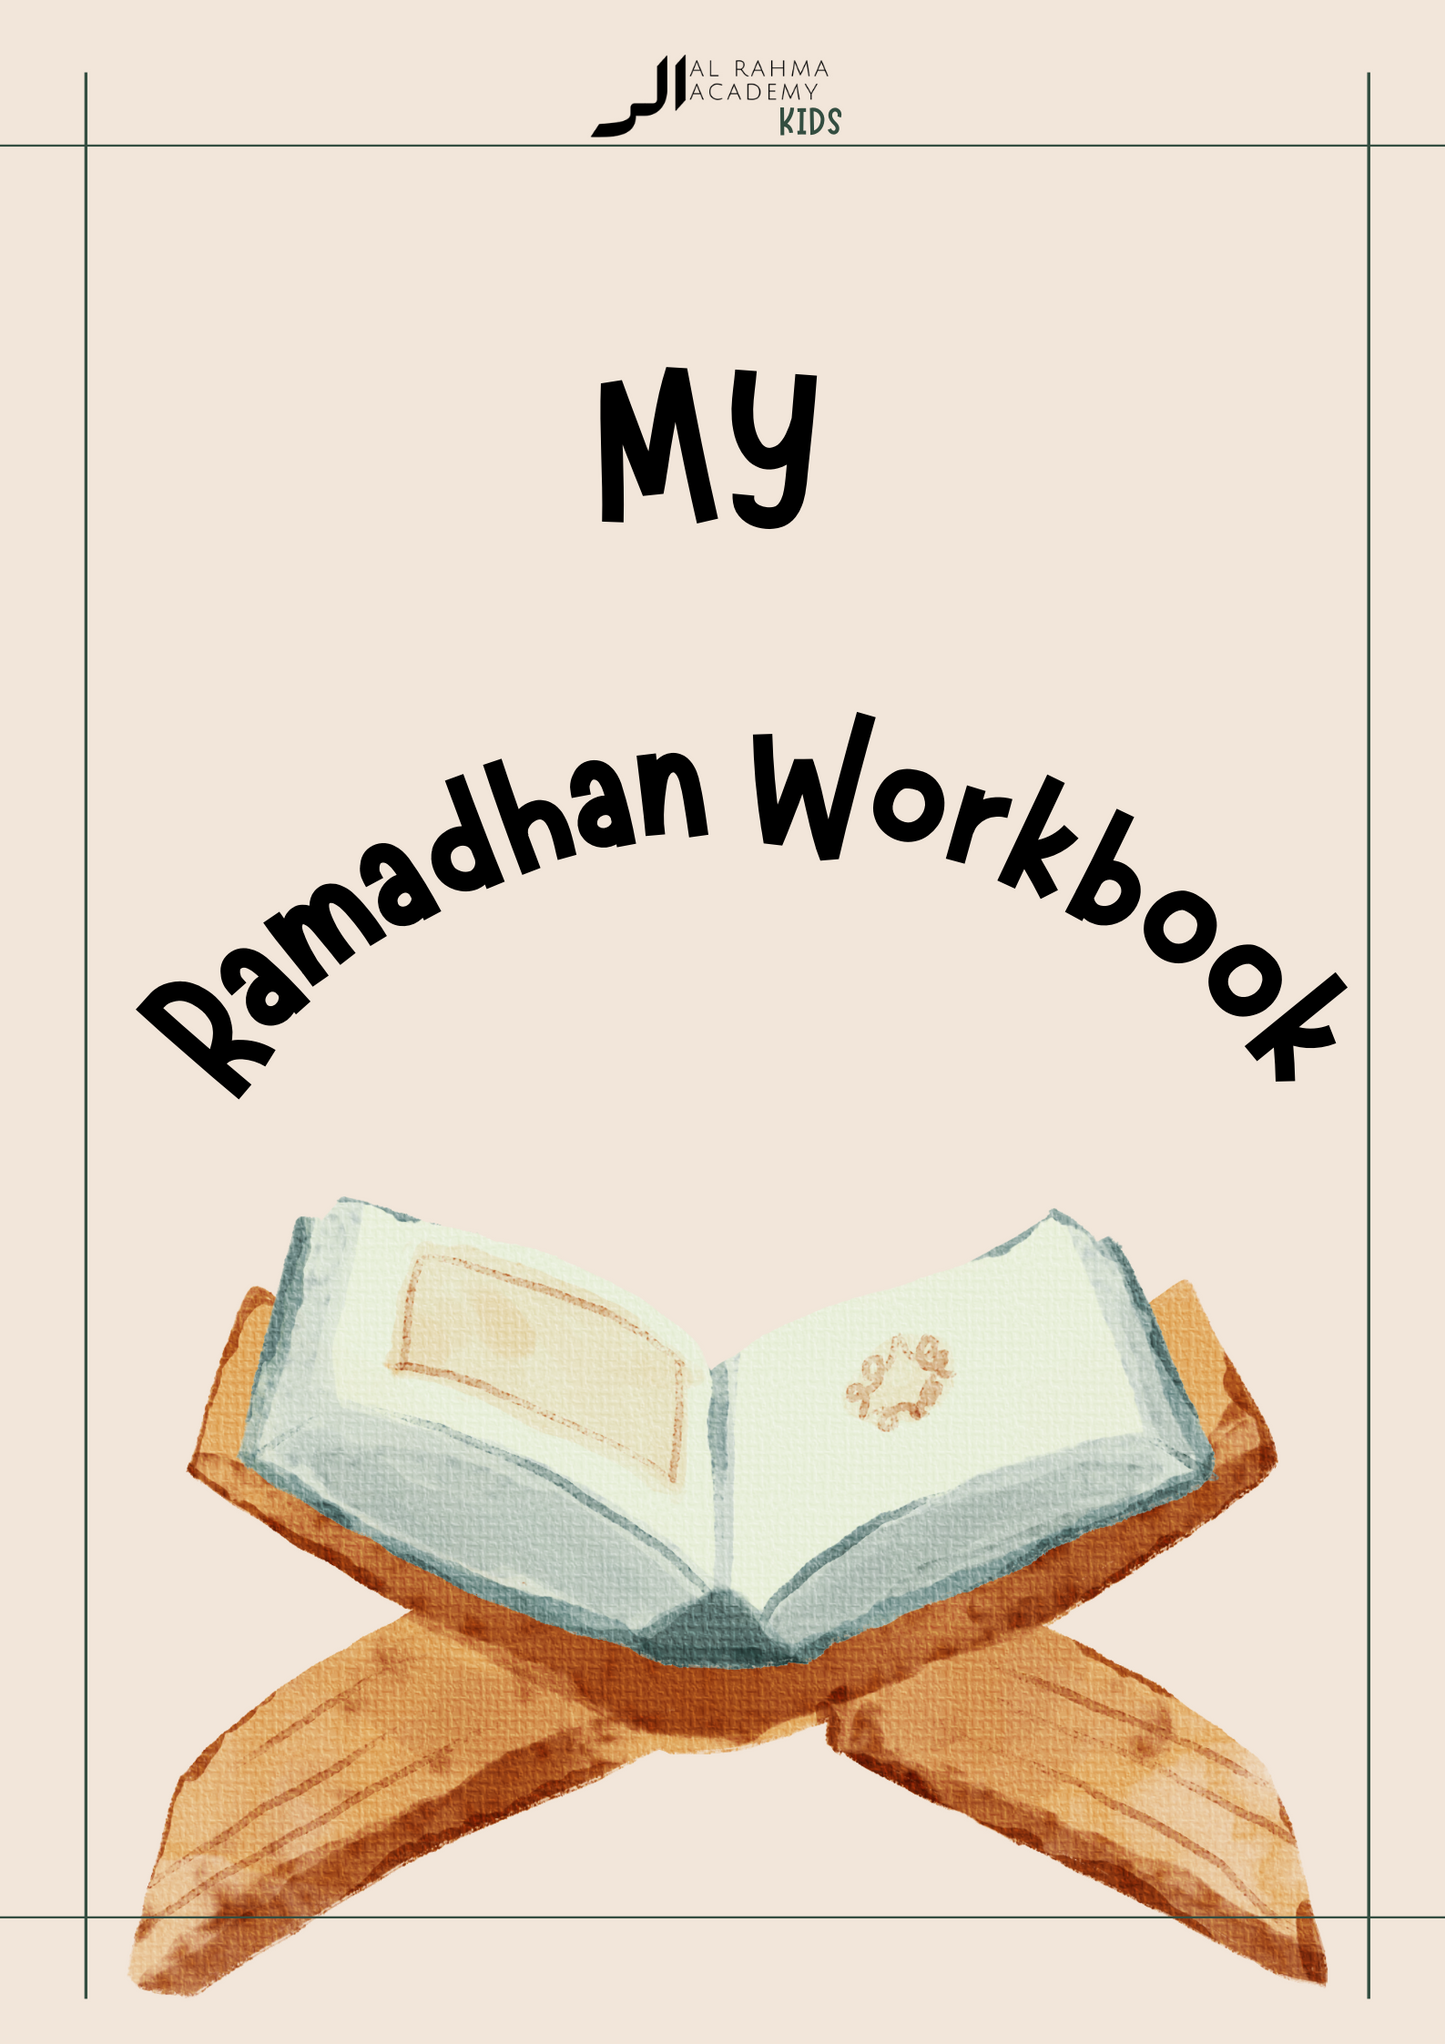 Ramadhan Workbook